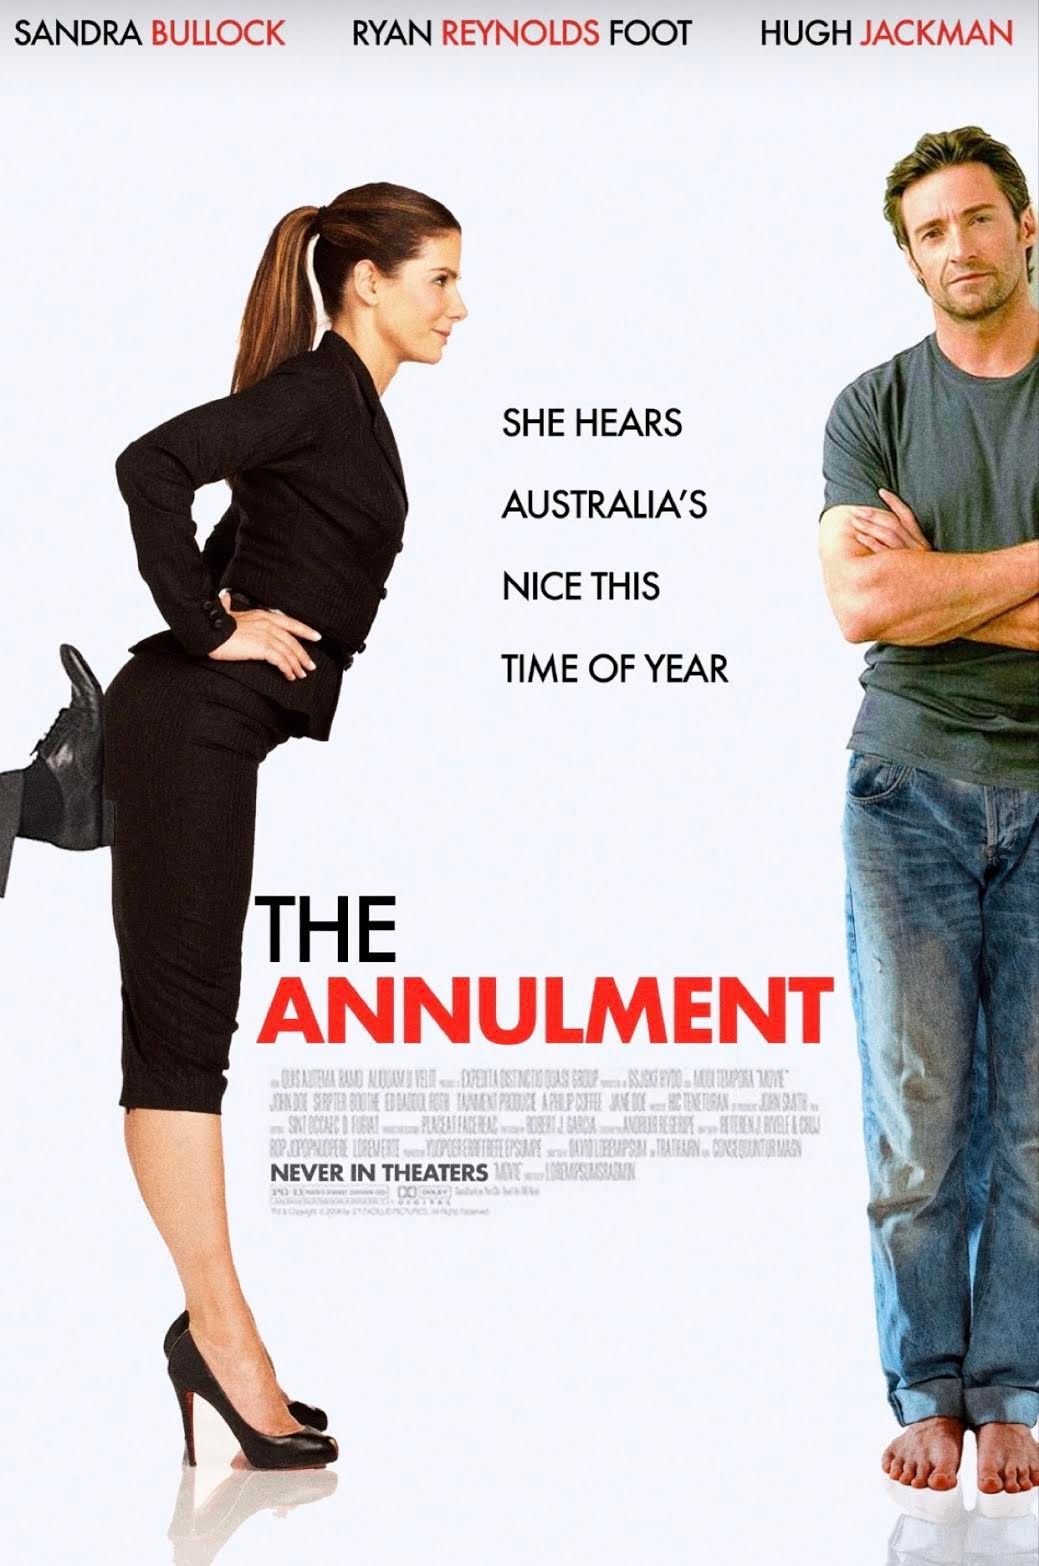 The Annulment Fake Ryan Reynolds Poster